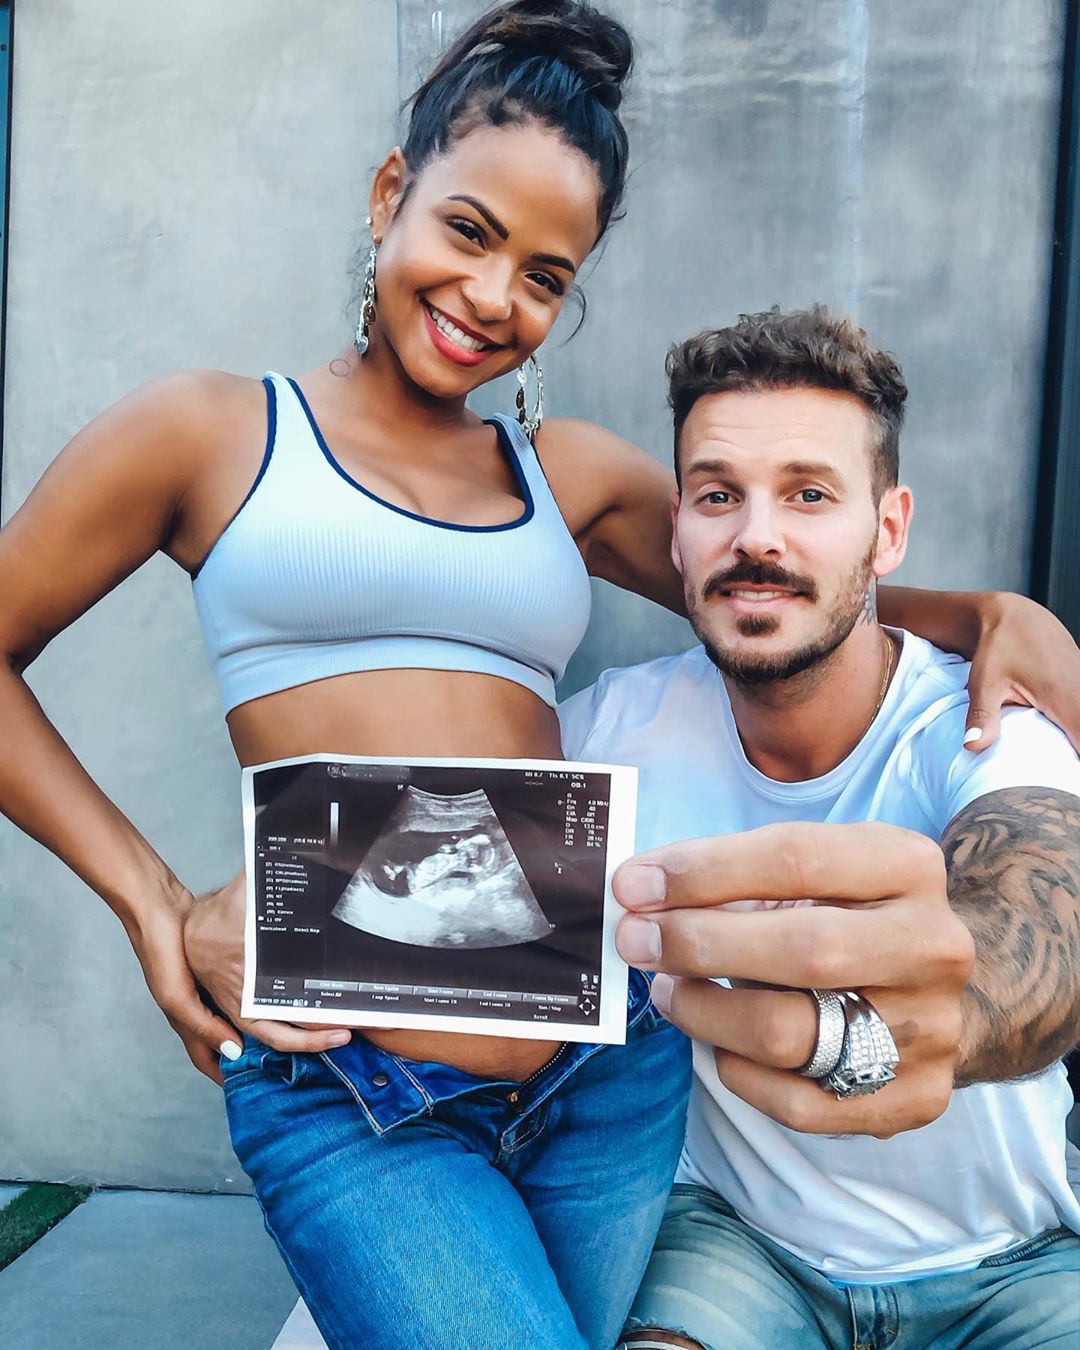 Christina Milian shares adorable baby news with boyfriend Matt Pokora: ‘What a blessing!’